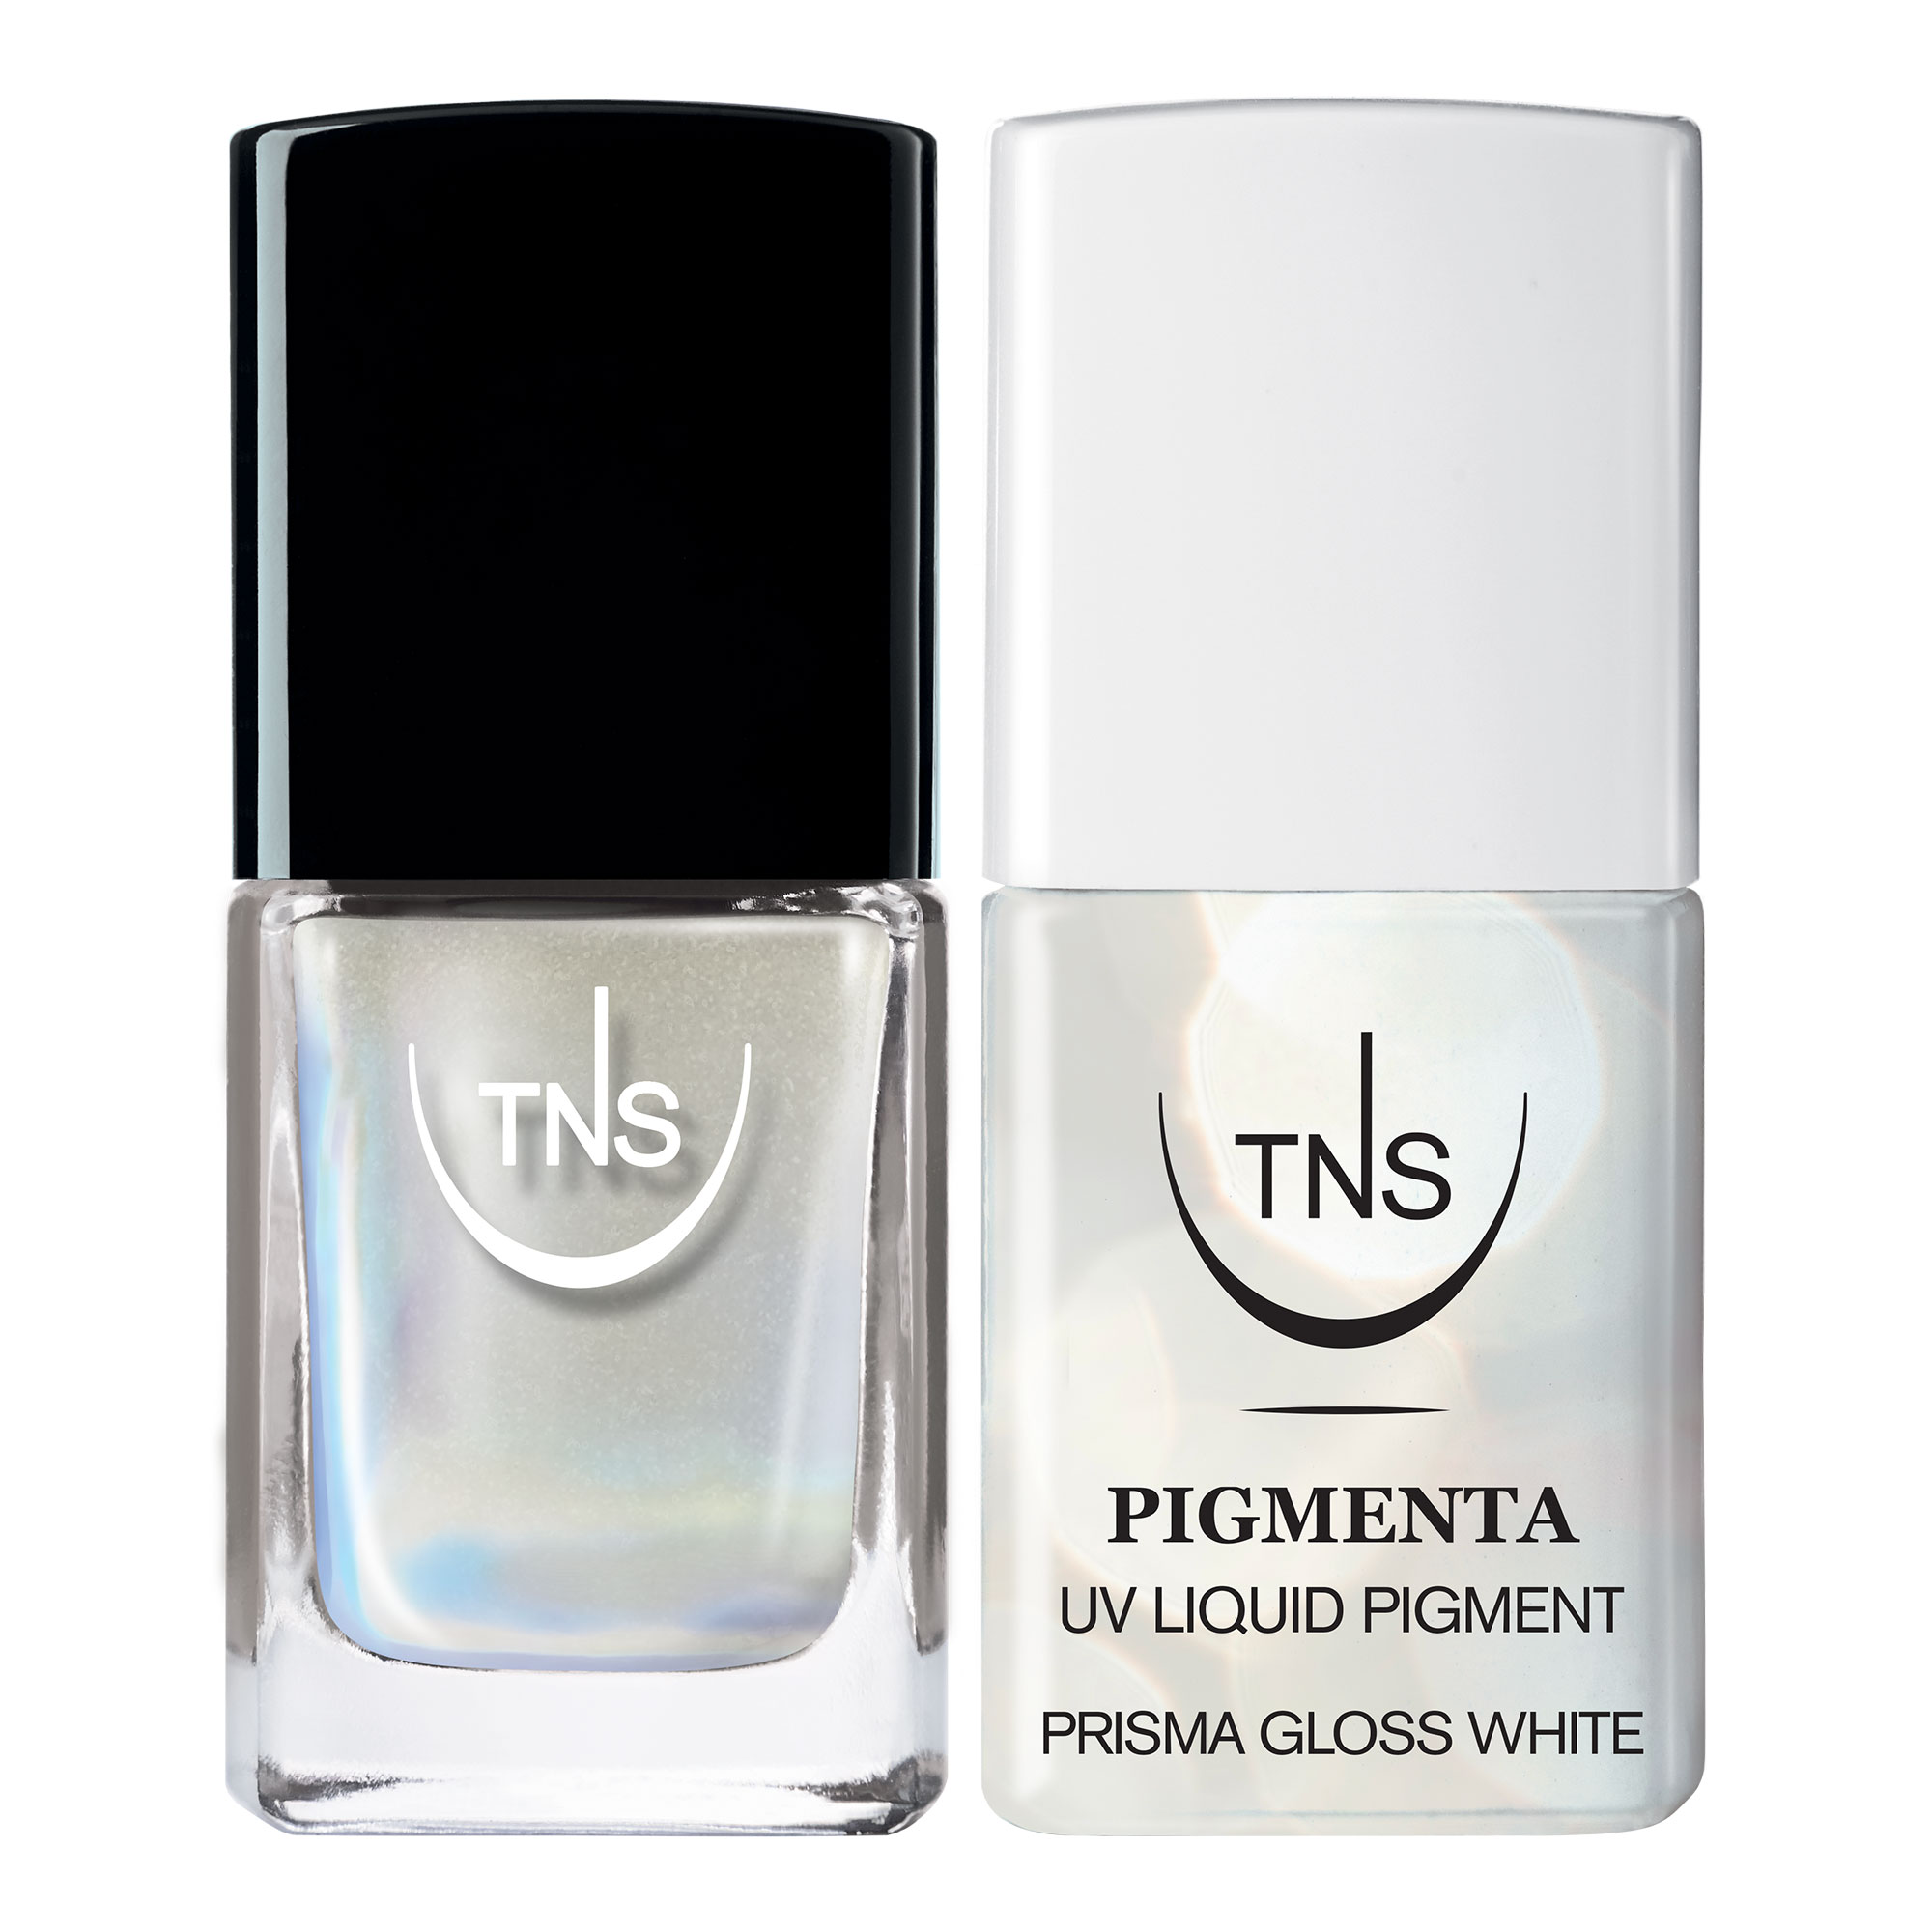 Kit Prisma Gloss TNS Pigmenta und irisierende Nagellacke